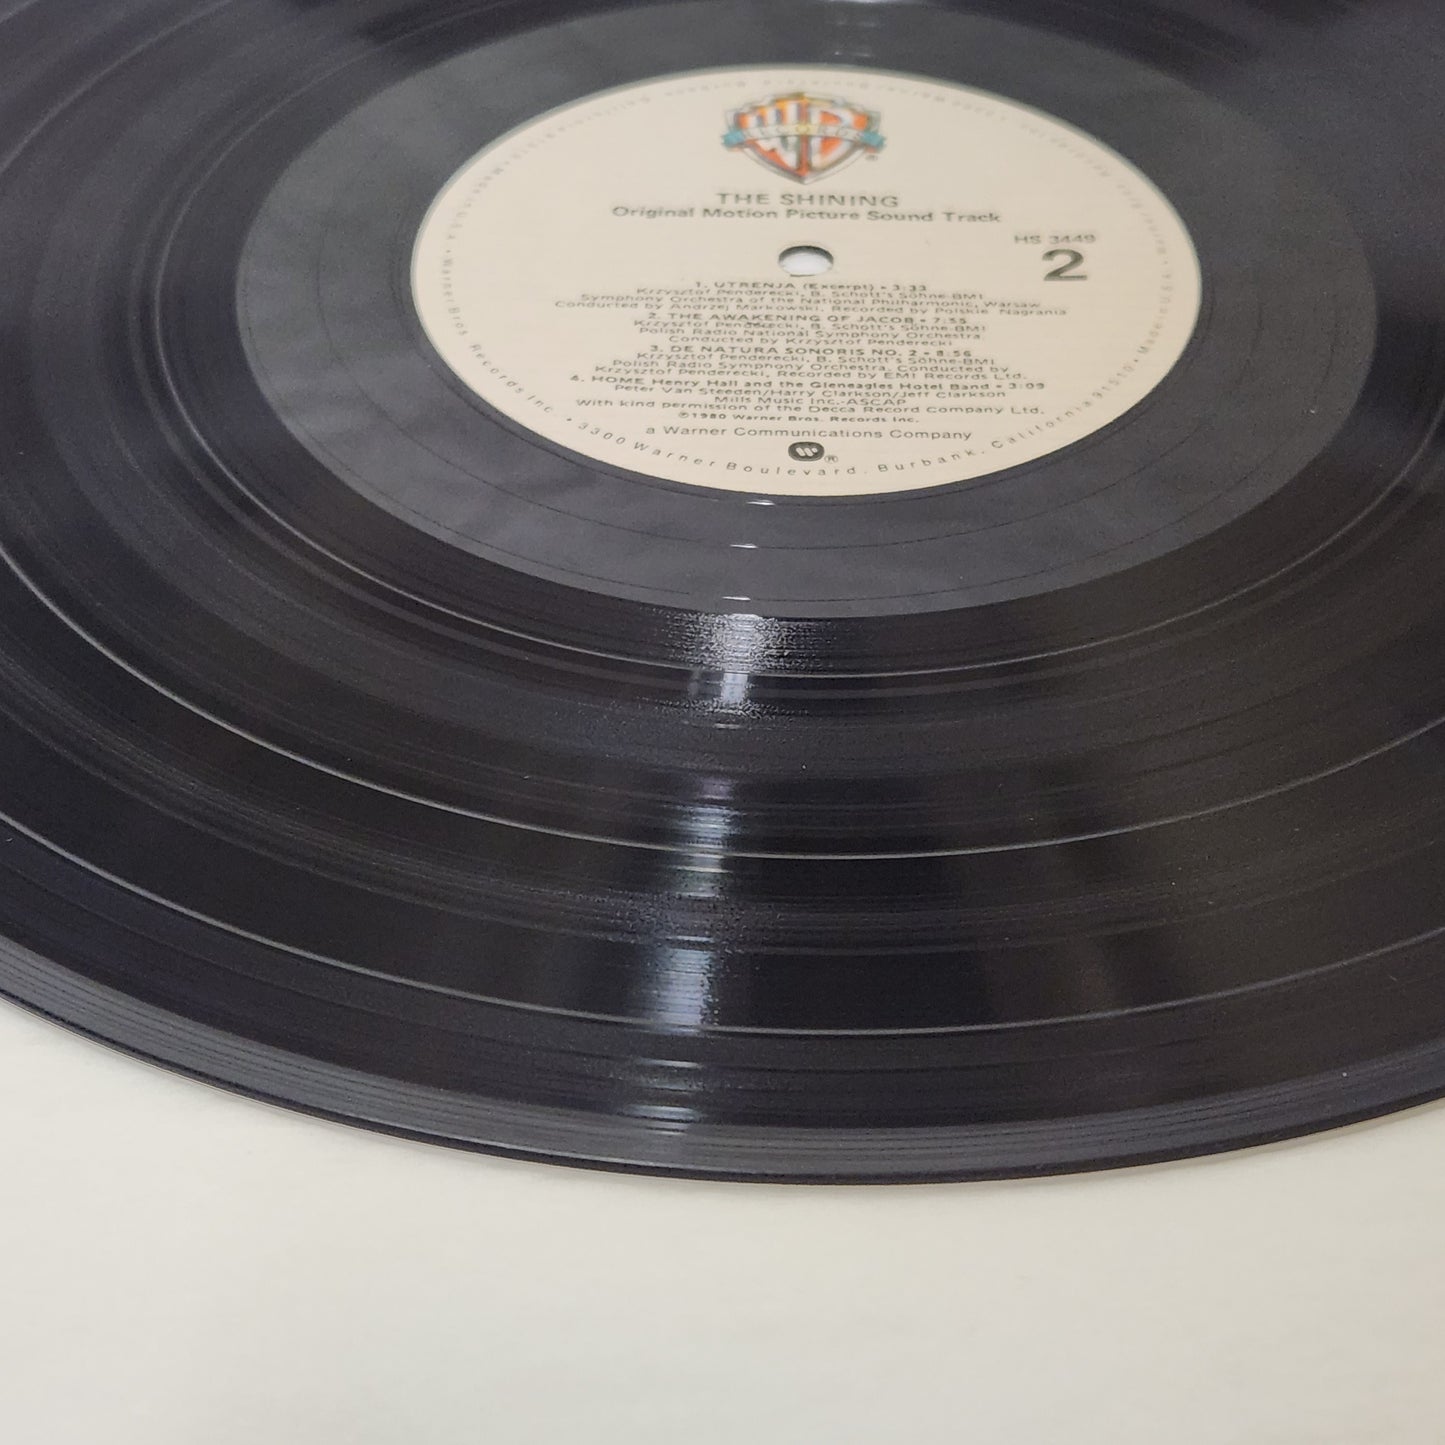 "The Shining" Original Motion Picture Soundtrack 1980 Record Album